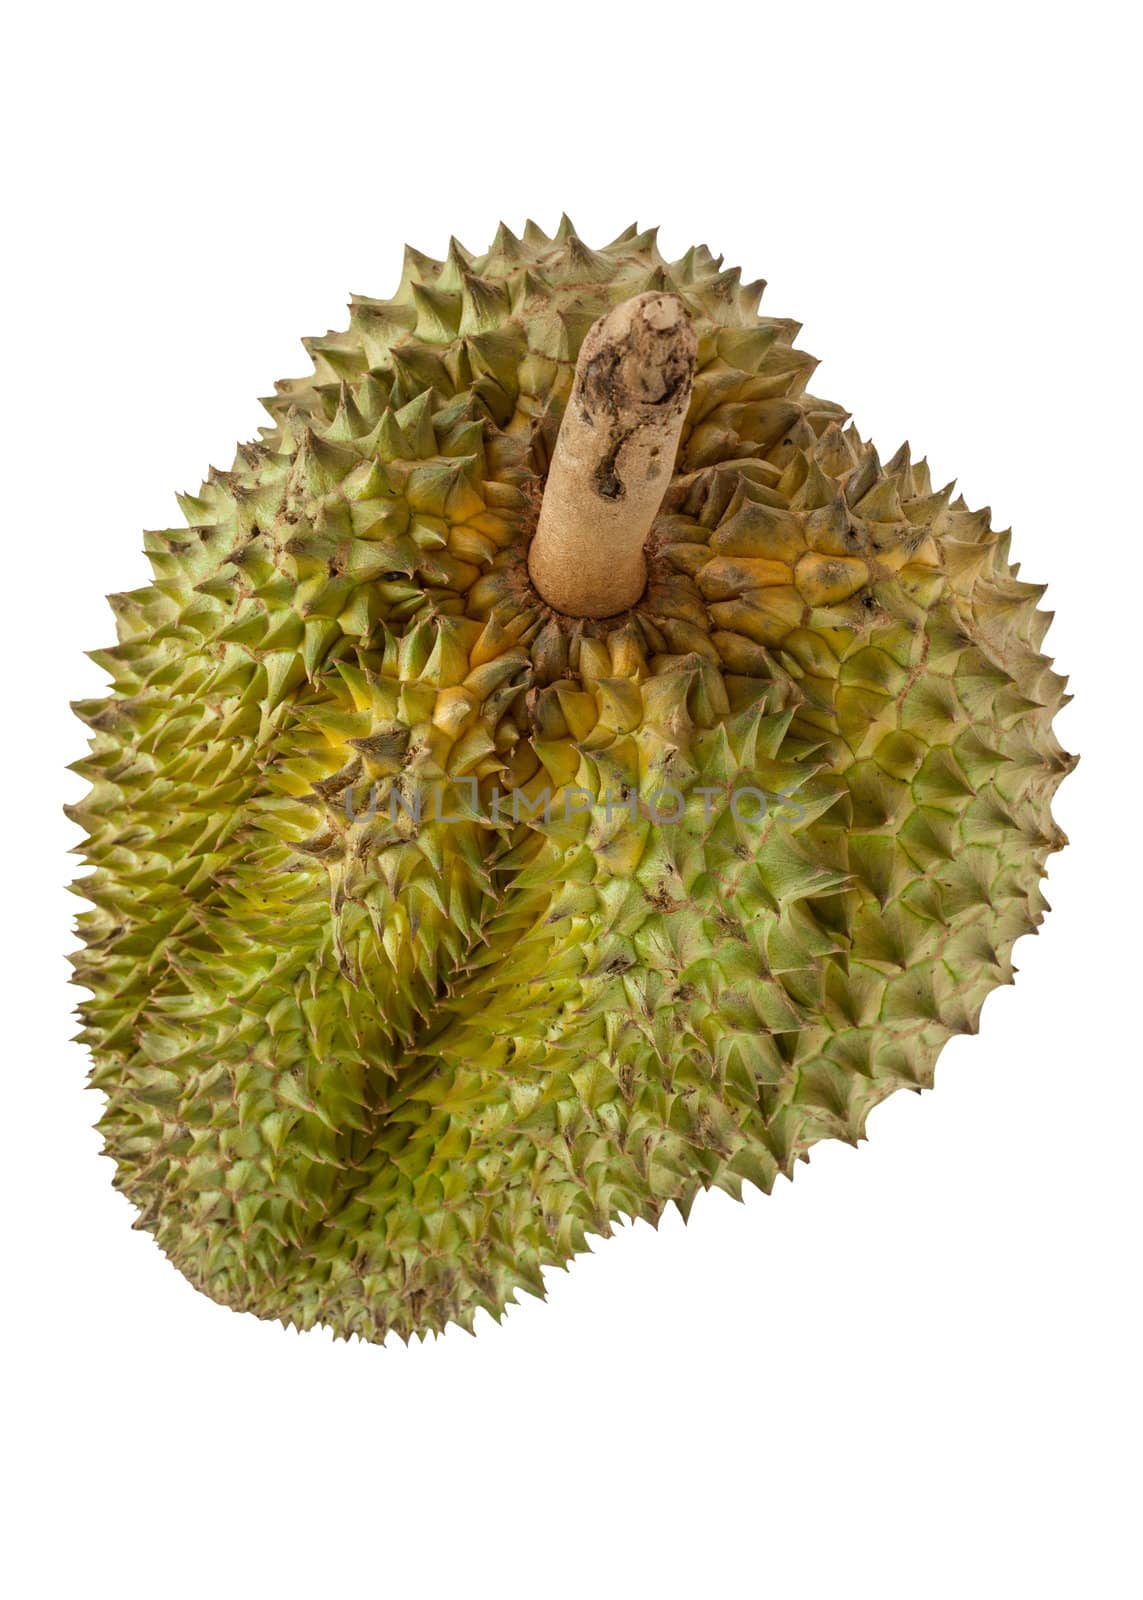 Durian fruits by FrameAngel